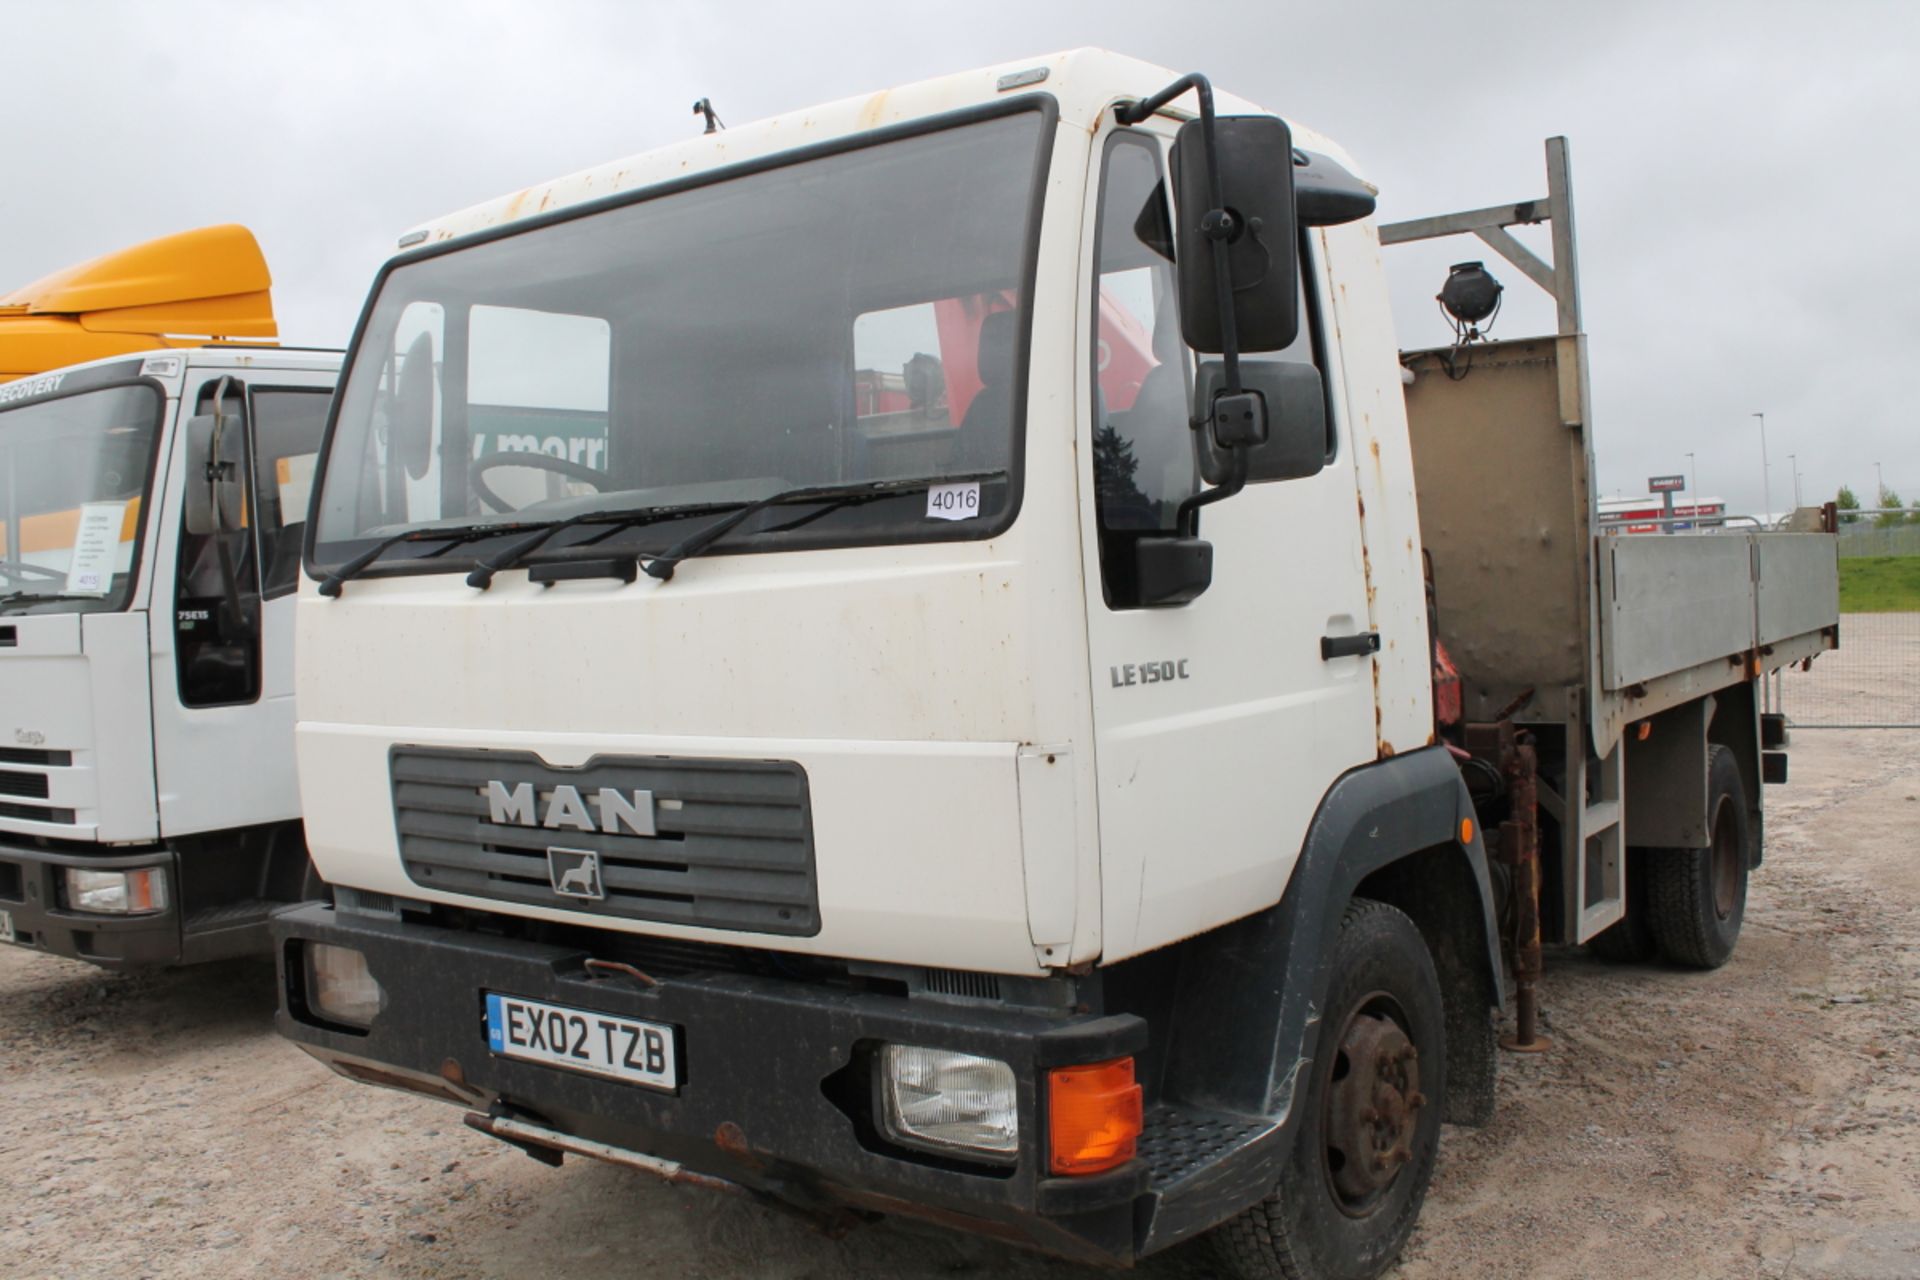 Man L 2000 8.155 Lrk Day - 4580cc 2 Door Truck